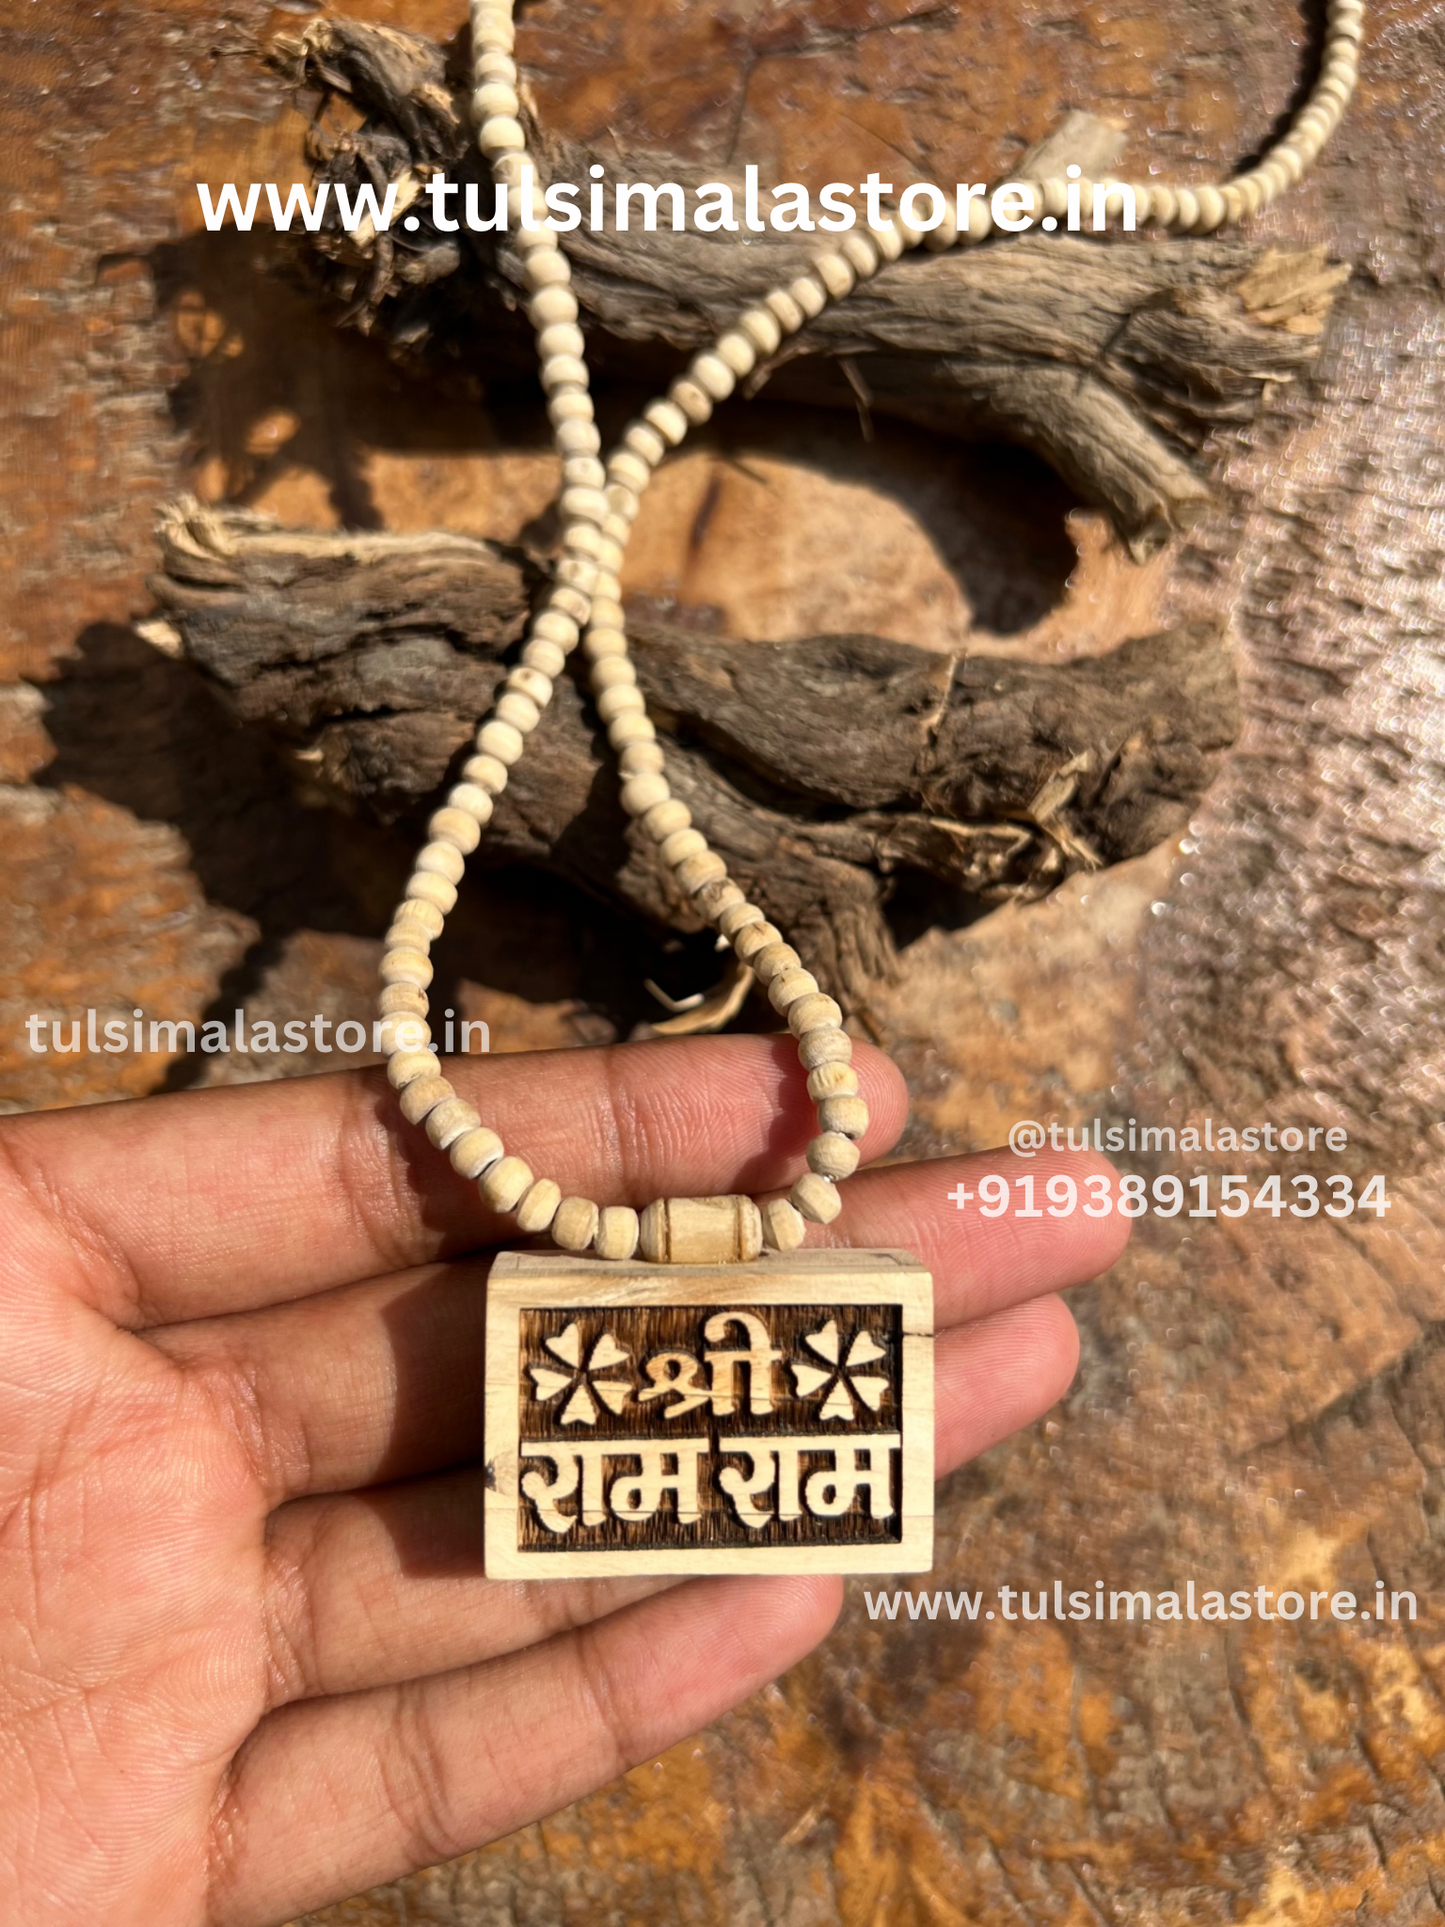 Tulsi Bhaktmal Kawach Ram Ram Locket With Tulsi 
Mala